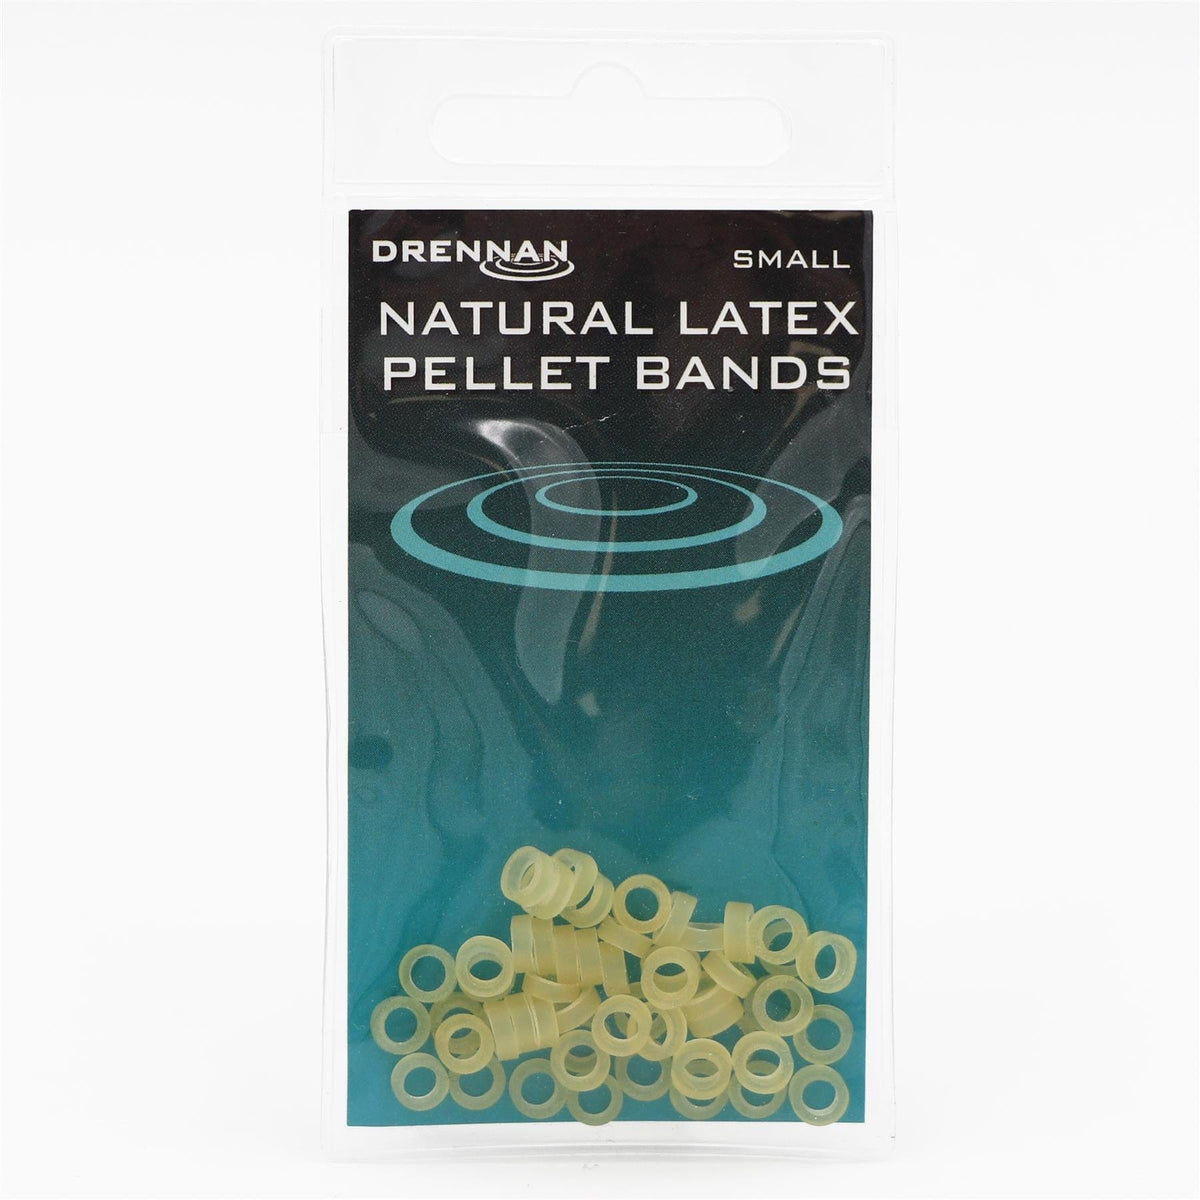 Drennan Natural Latex Pellet Bands.